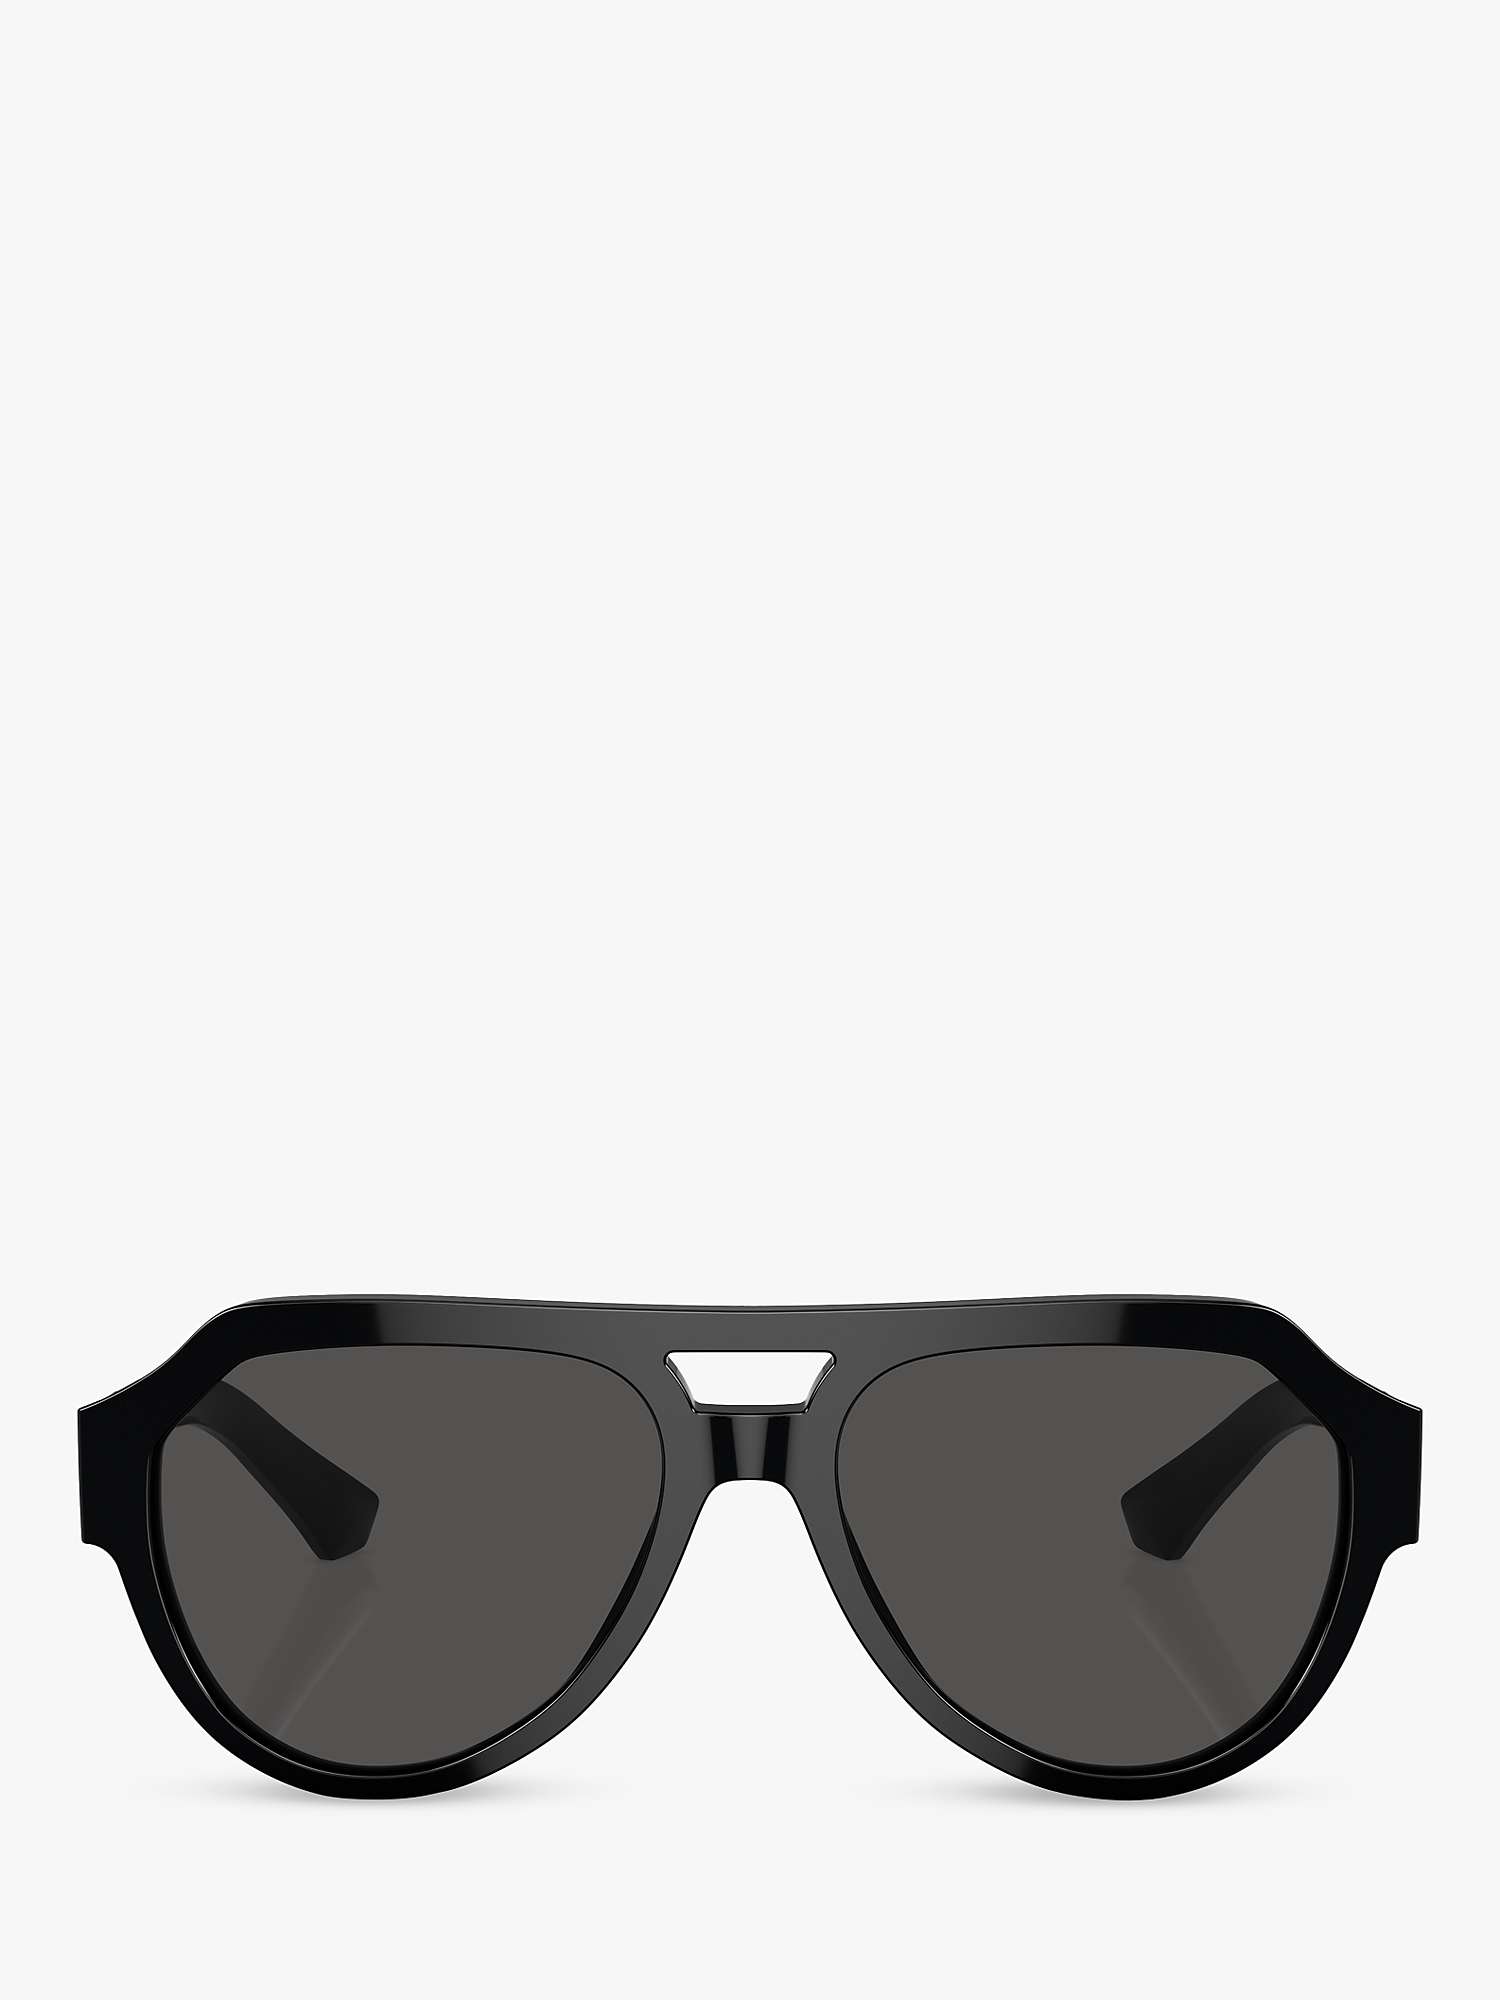 Buy Dolce & Gabbana DG4466 Men's Aviator Sunglasses, Black/Grey Online at johnlewis.com